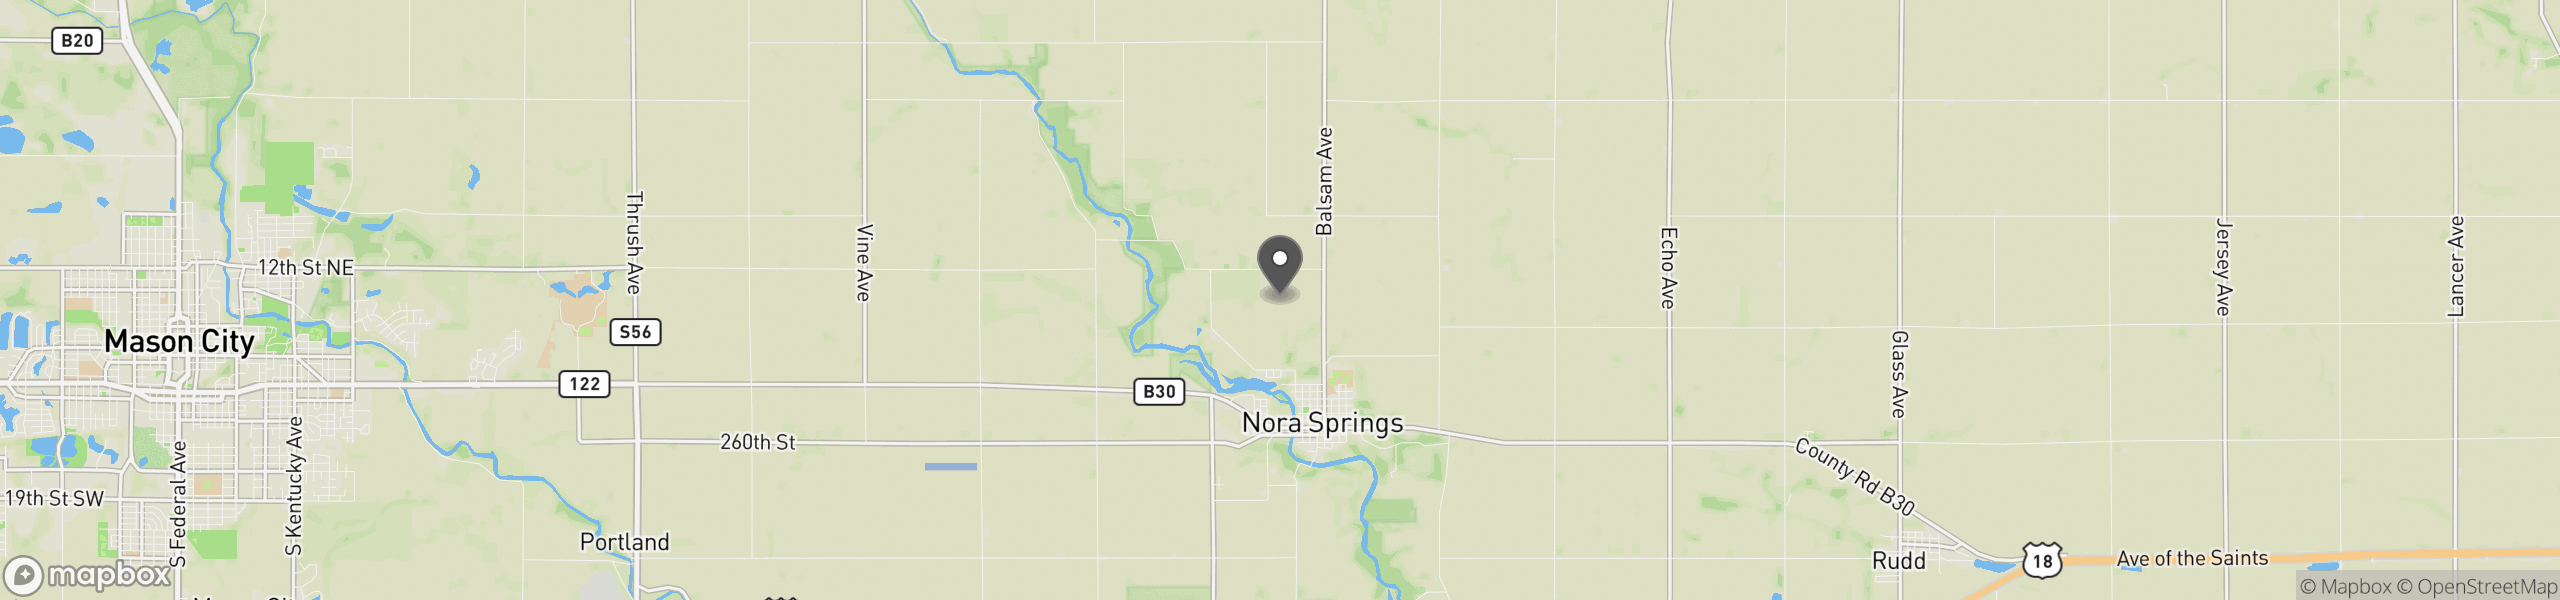 Nora Springs, IA 50458